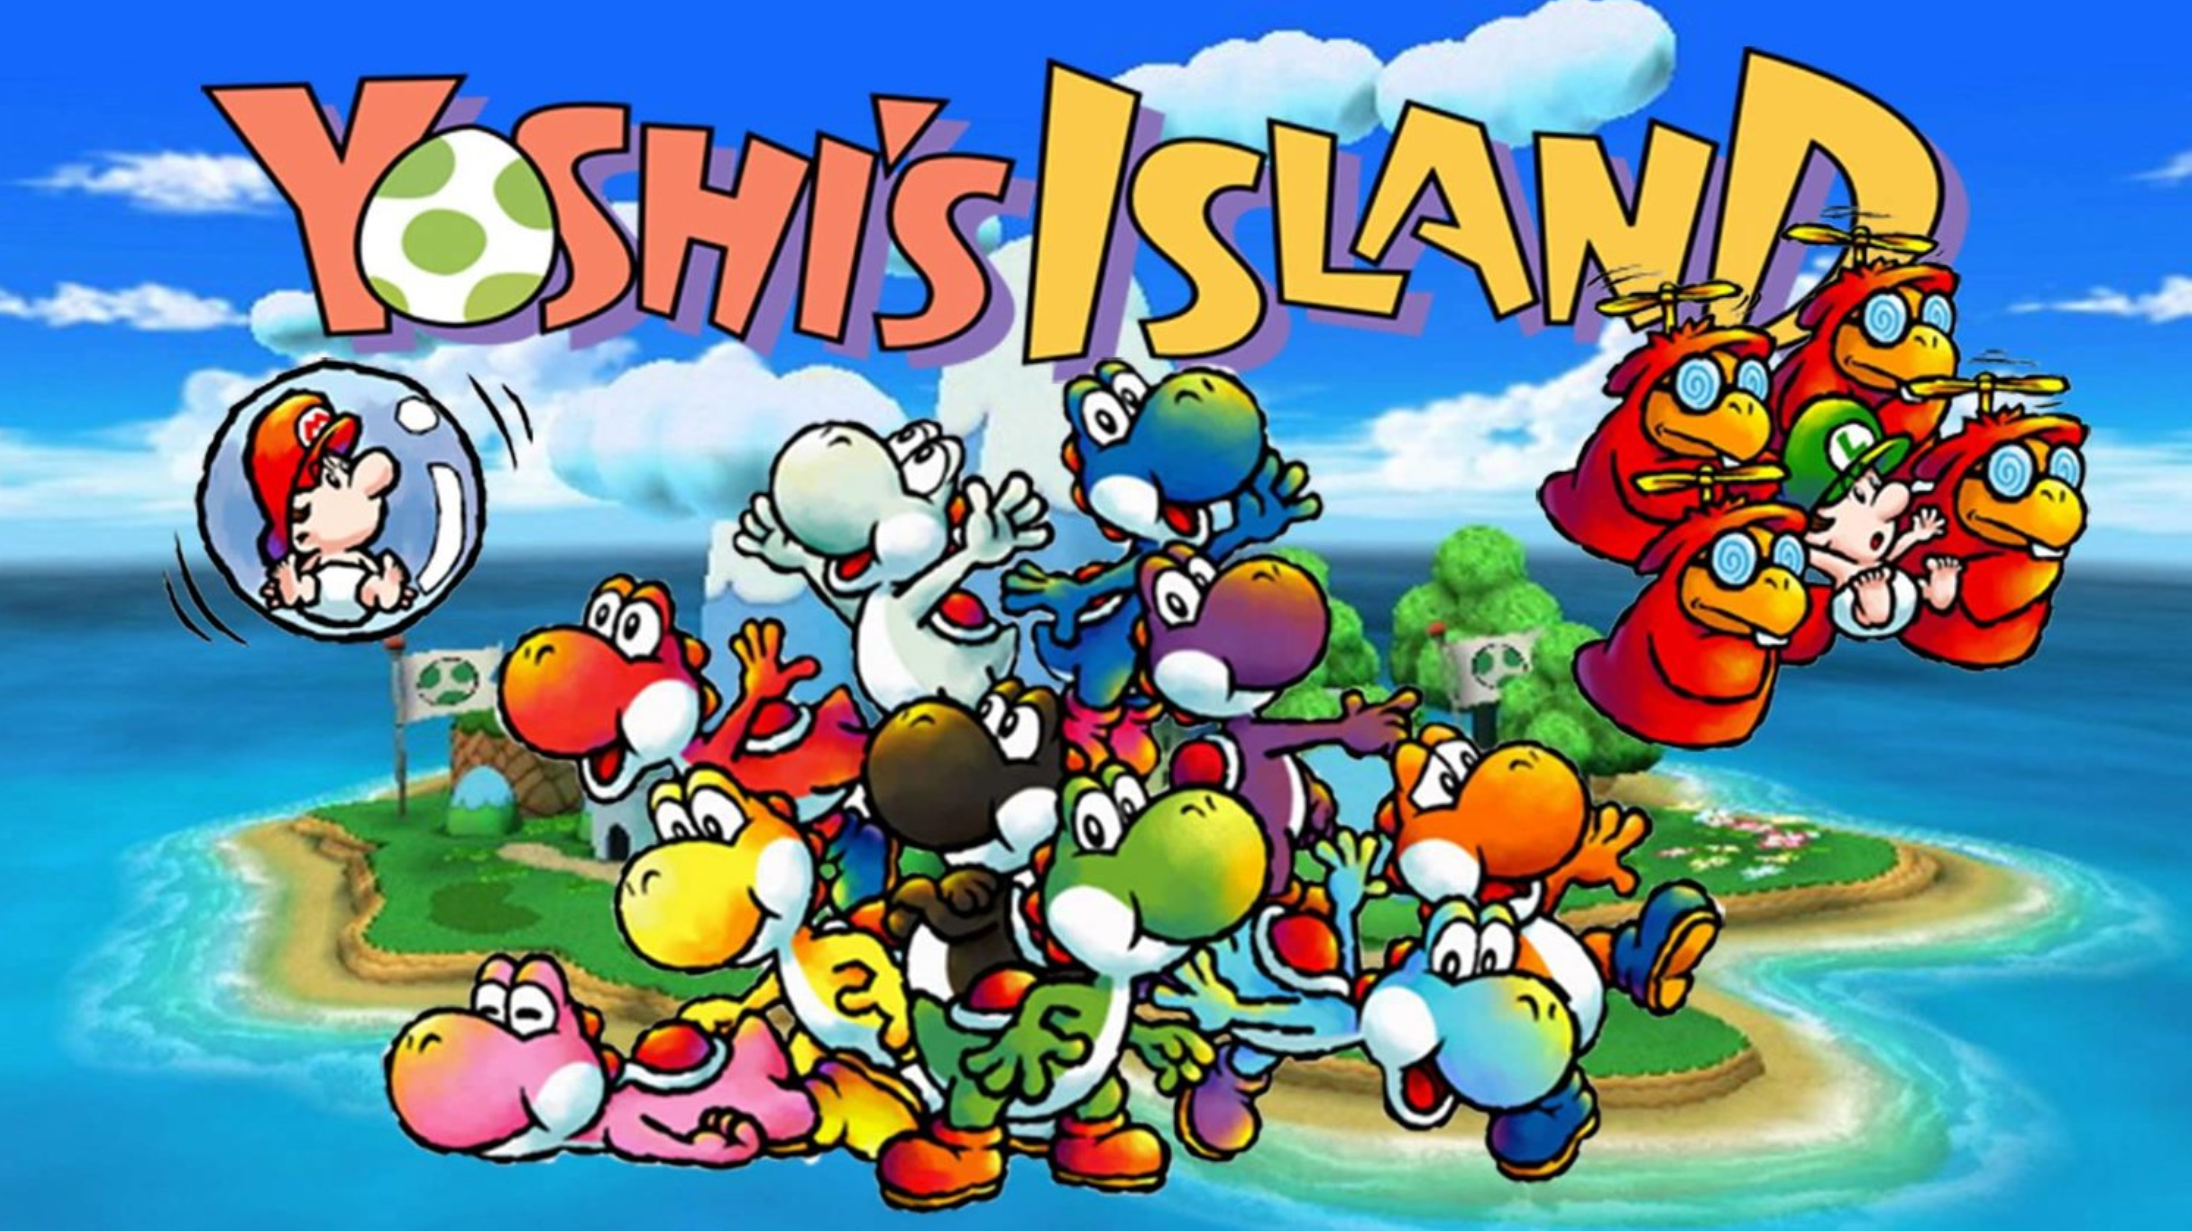 Yoshi island 2. Super Mario World 2 Yoshi's Island. Super Mario World 2 Yoshis Island. Super Mario World 2 остров Йоши. Super Mario World 2 - Yoshi's Island Snes.